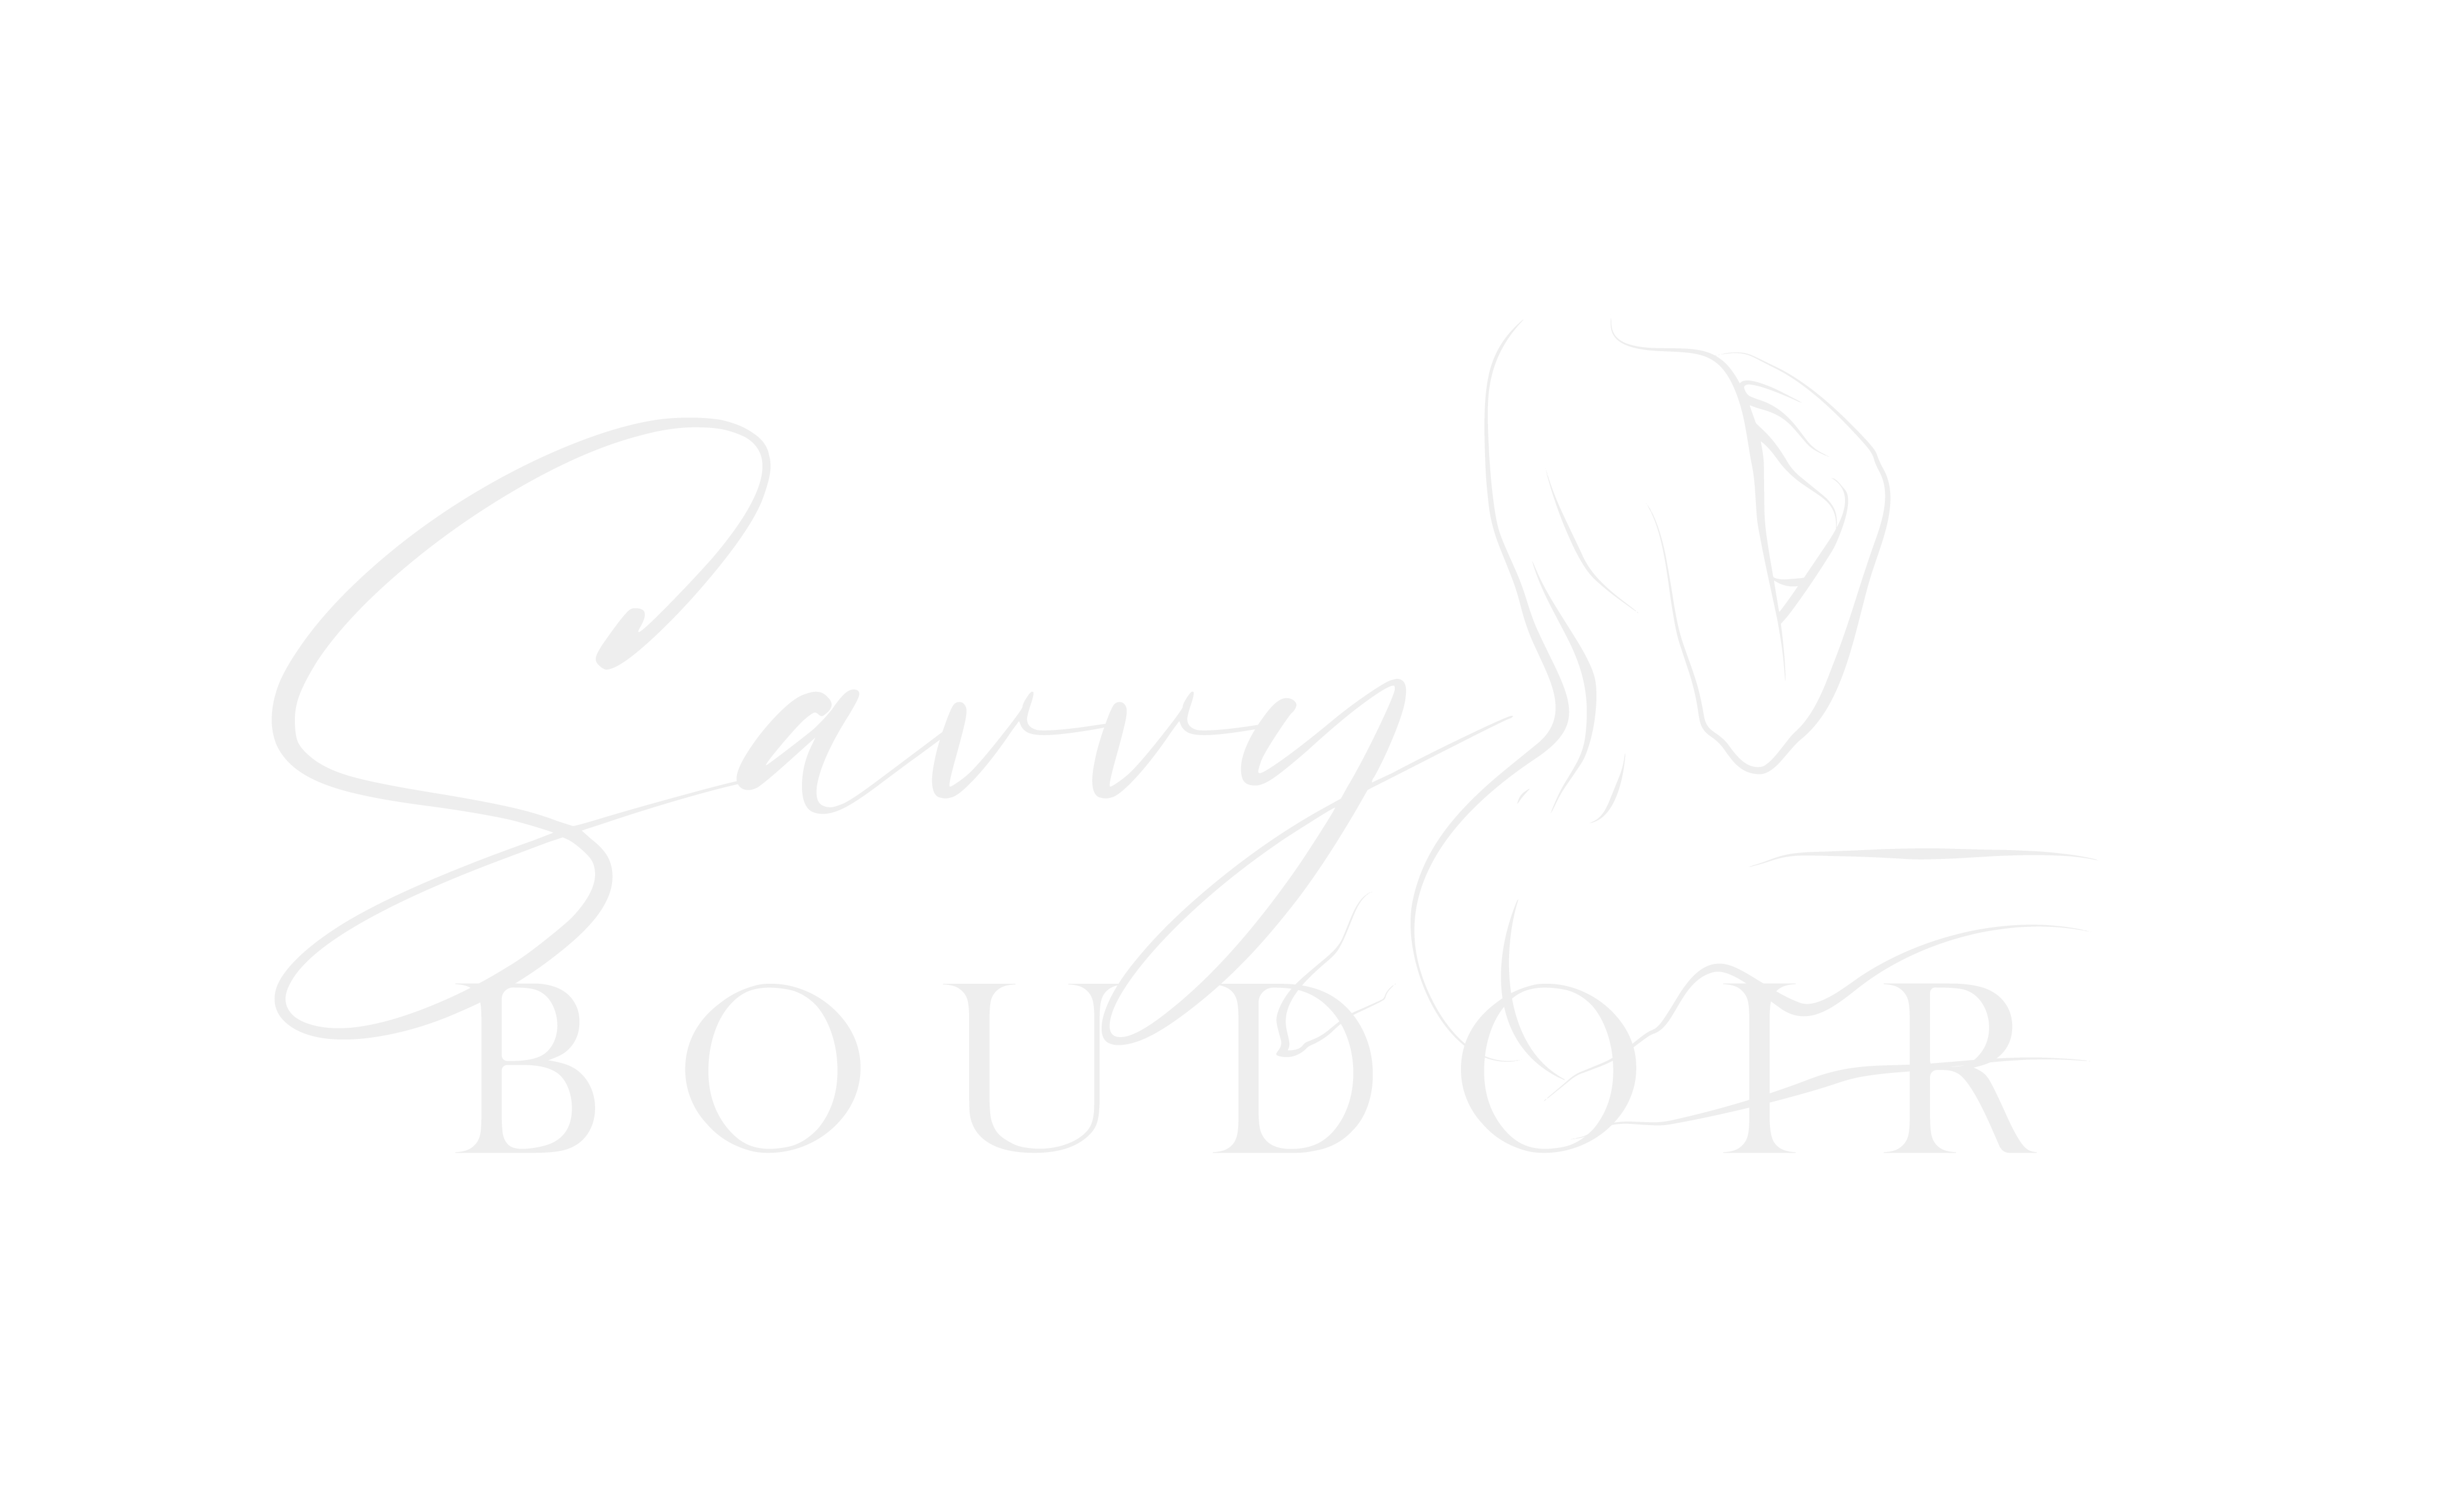 Savvy Boudoir